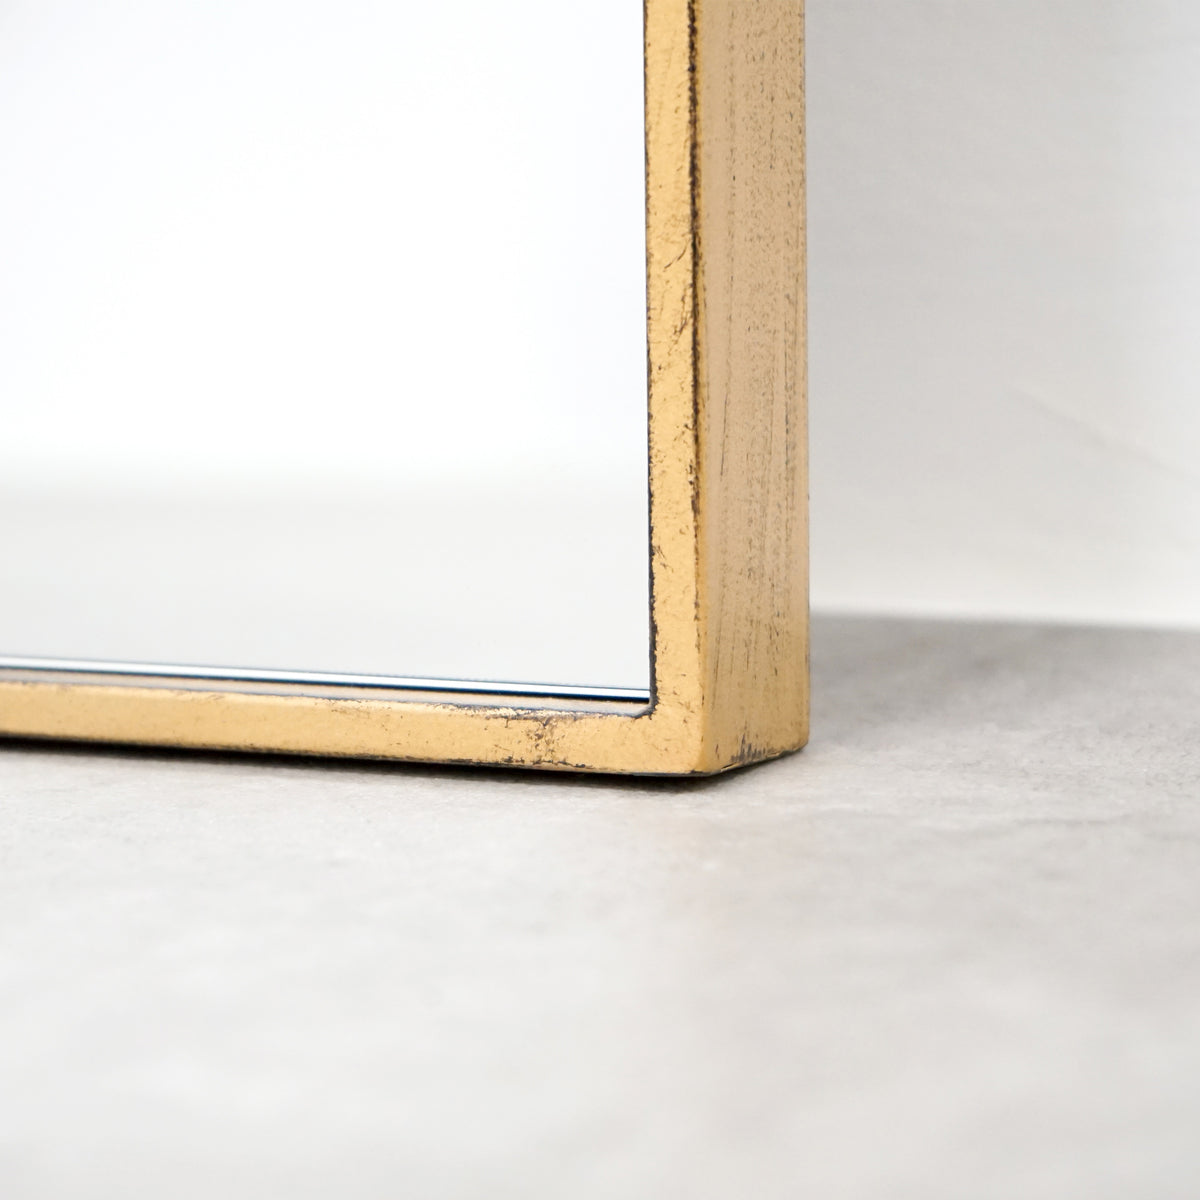 Gold Full Length Arched Metal Mirror detail shot of corner